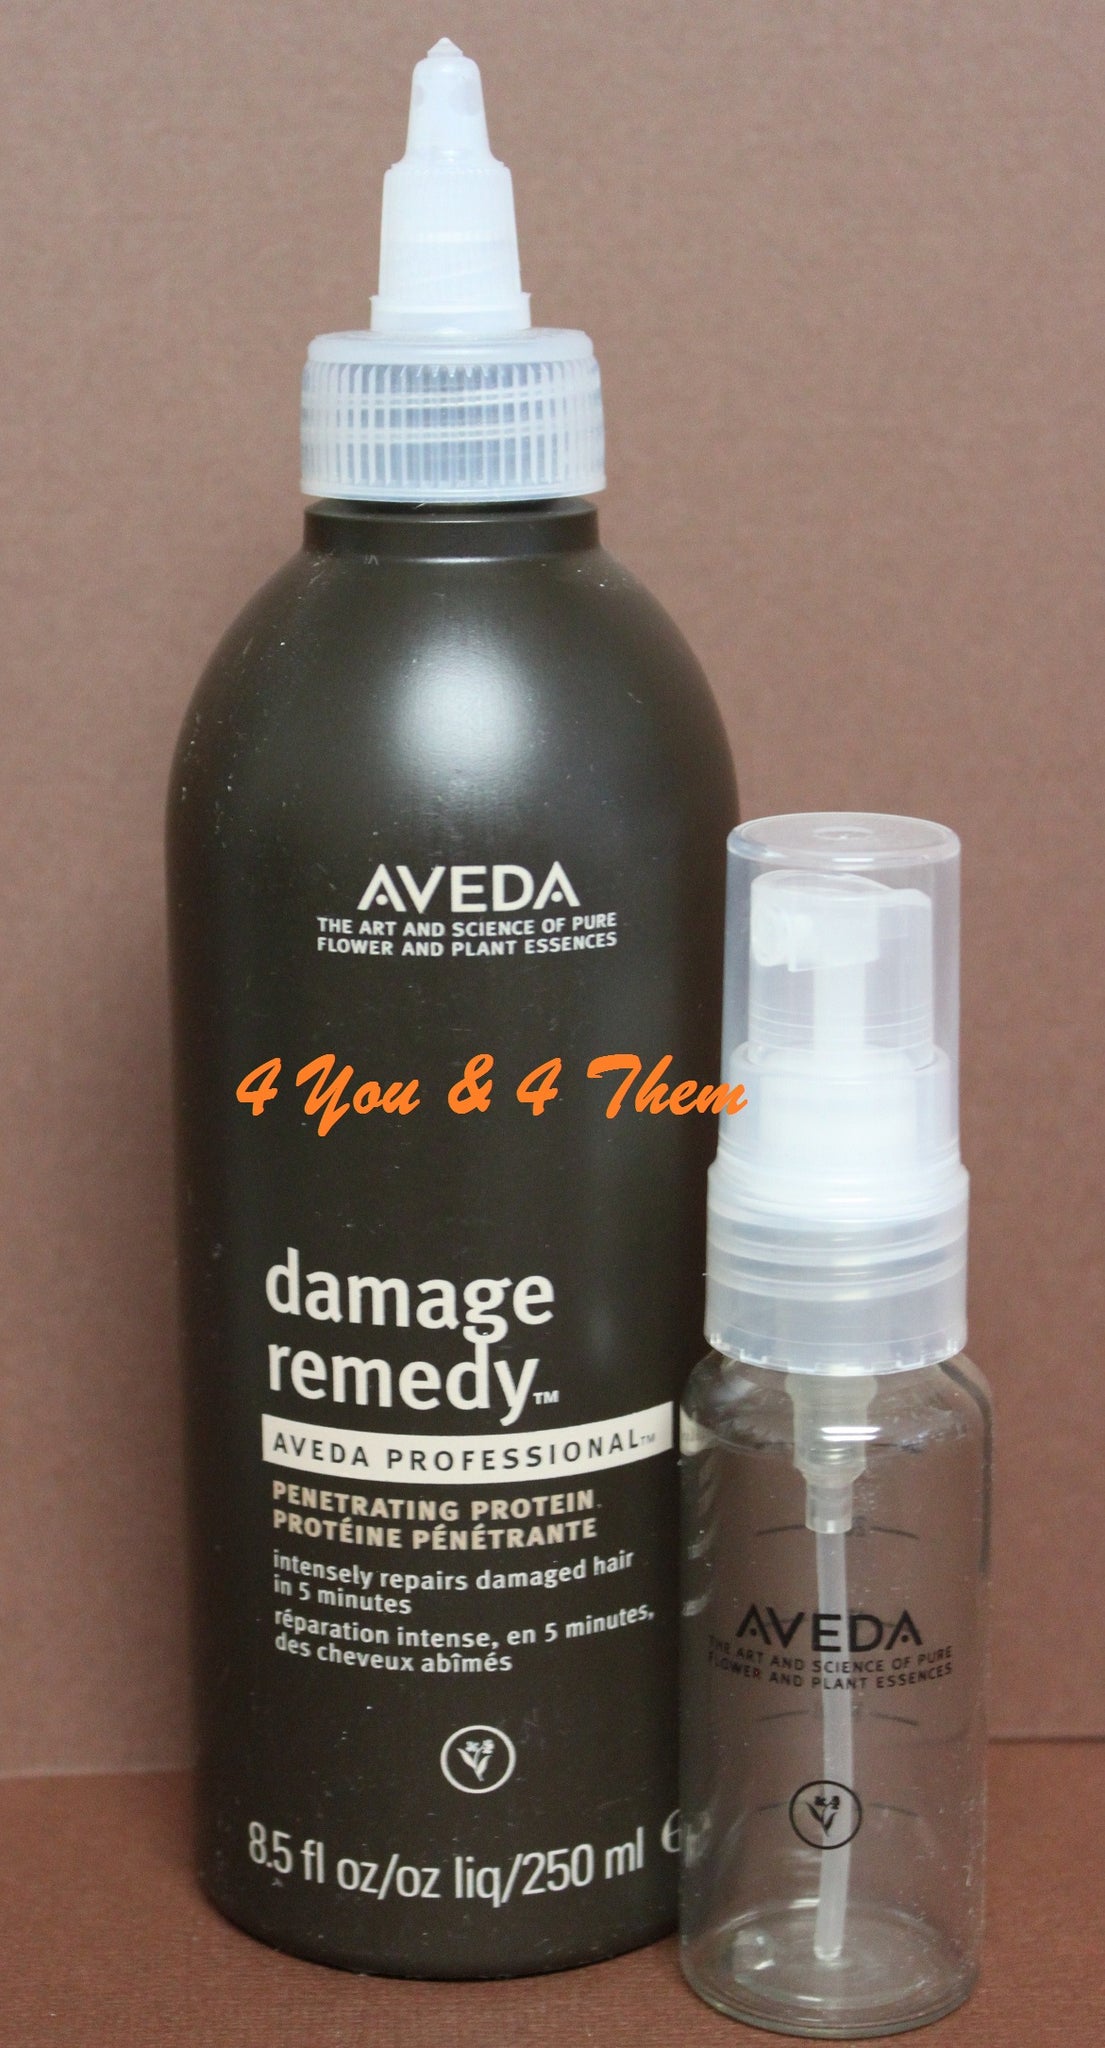 AVEDA Professional Damage Remedy penetrating protein 250ml 8.5oz (free spray bottle)